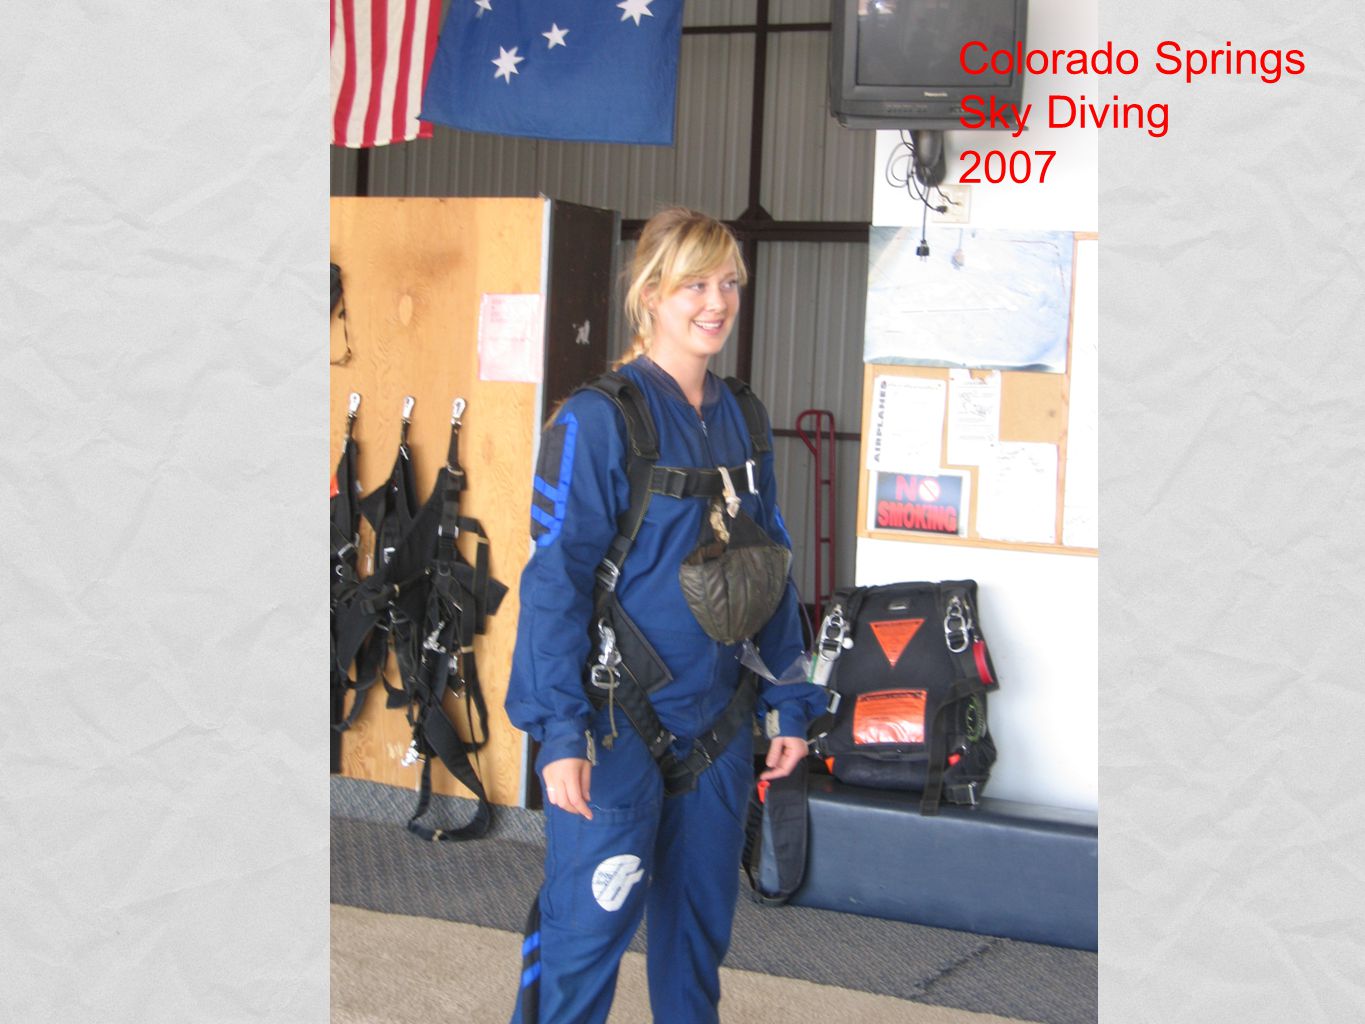 Colorado Springs Sky Diving 2007